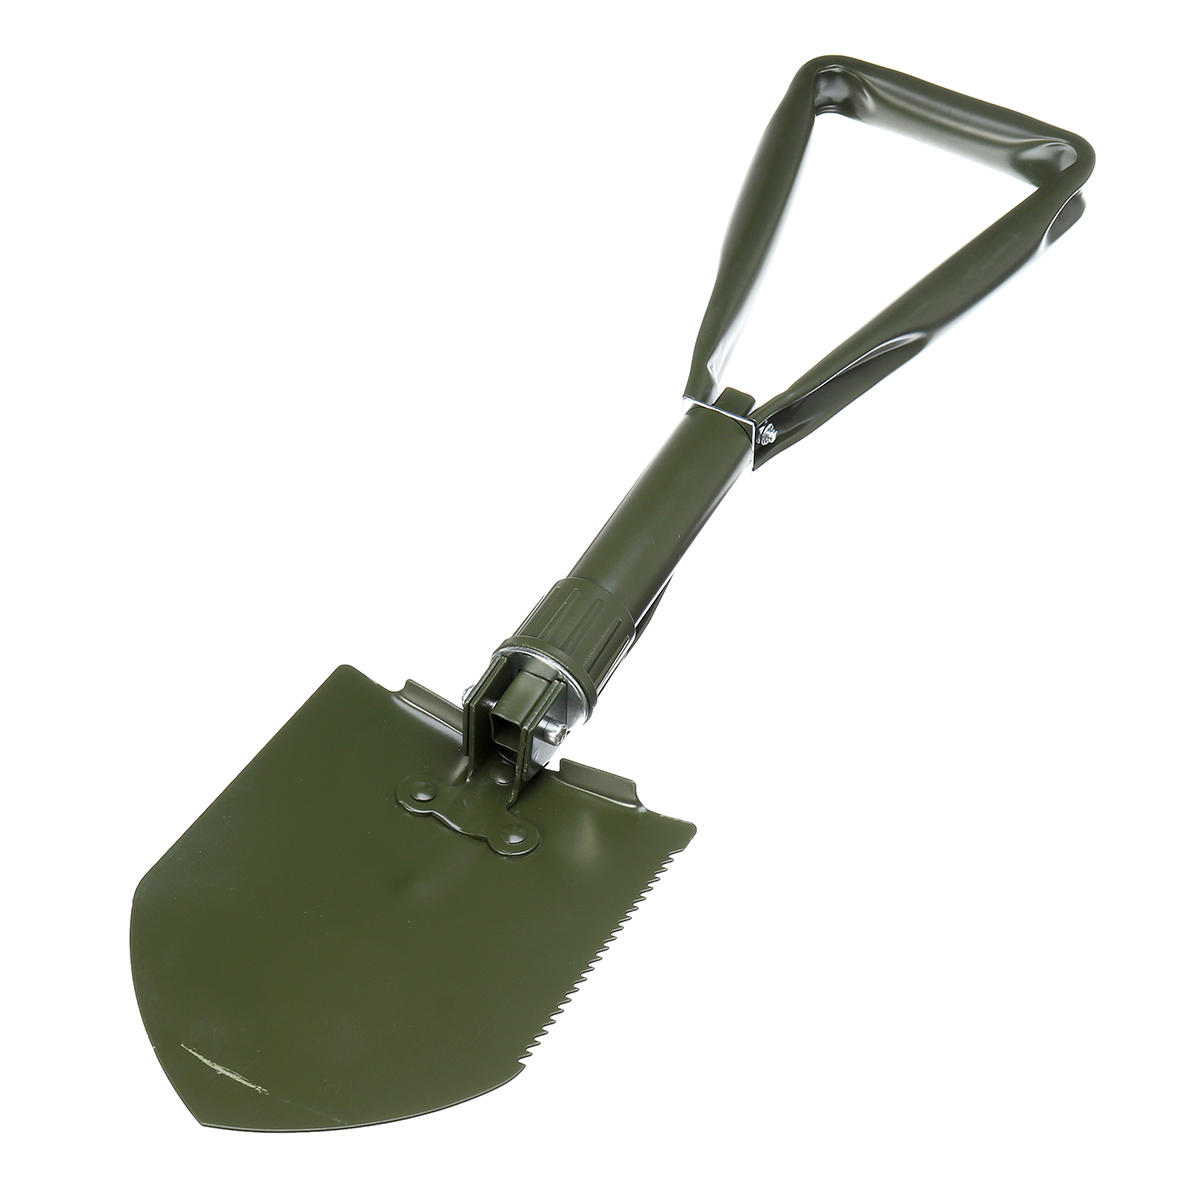 foldable camping shovel